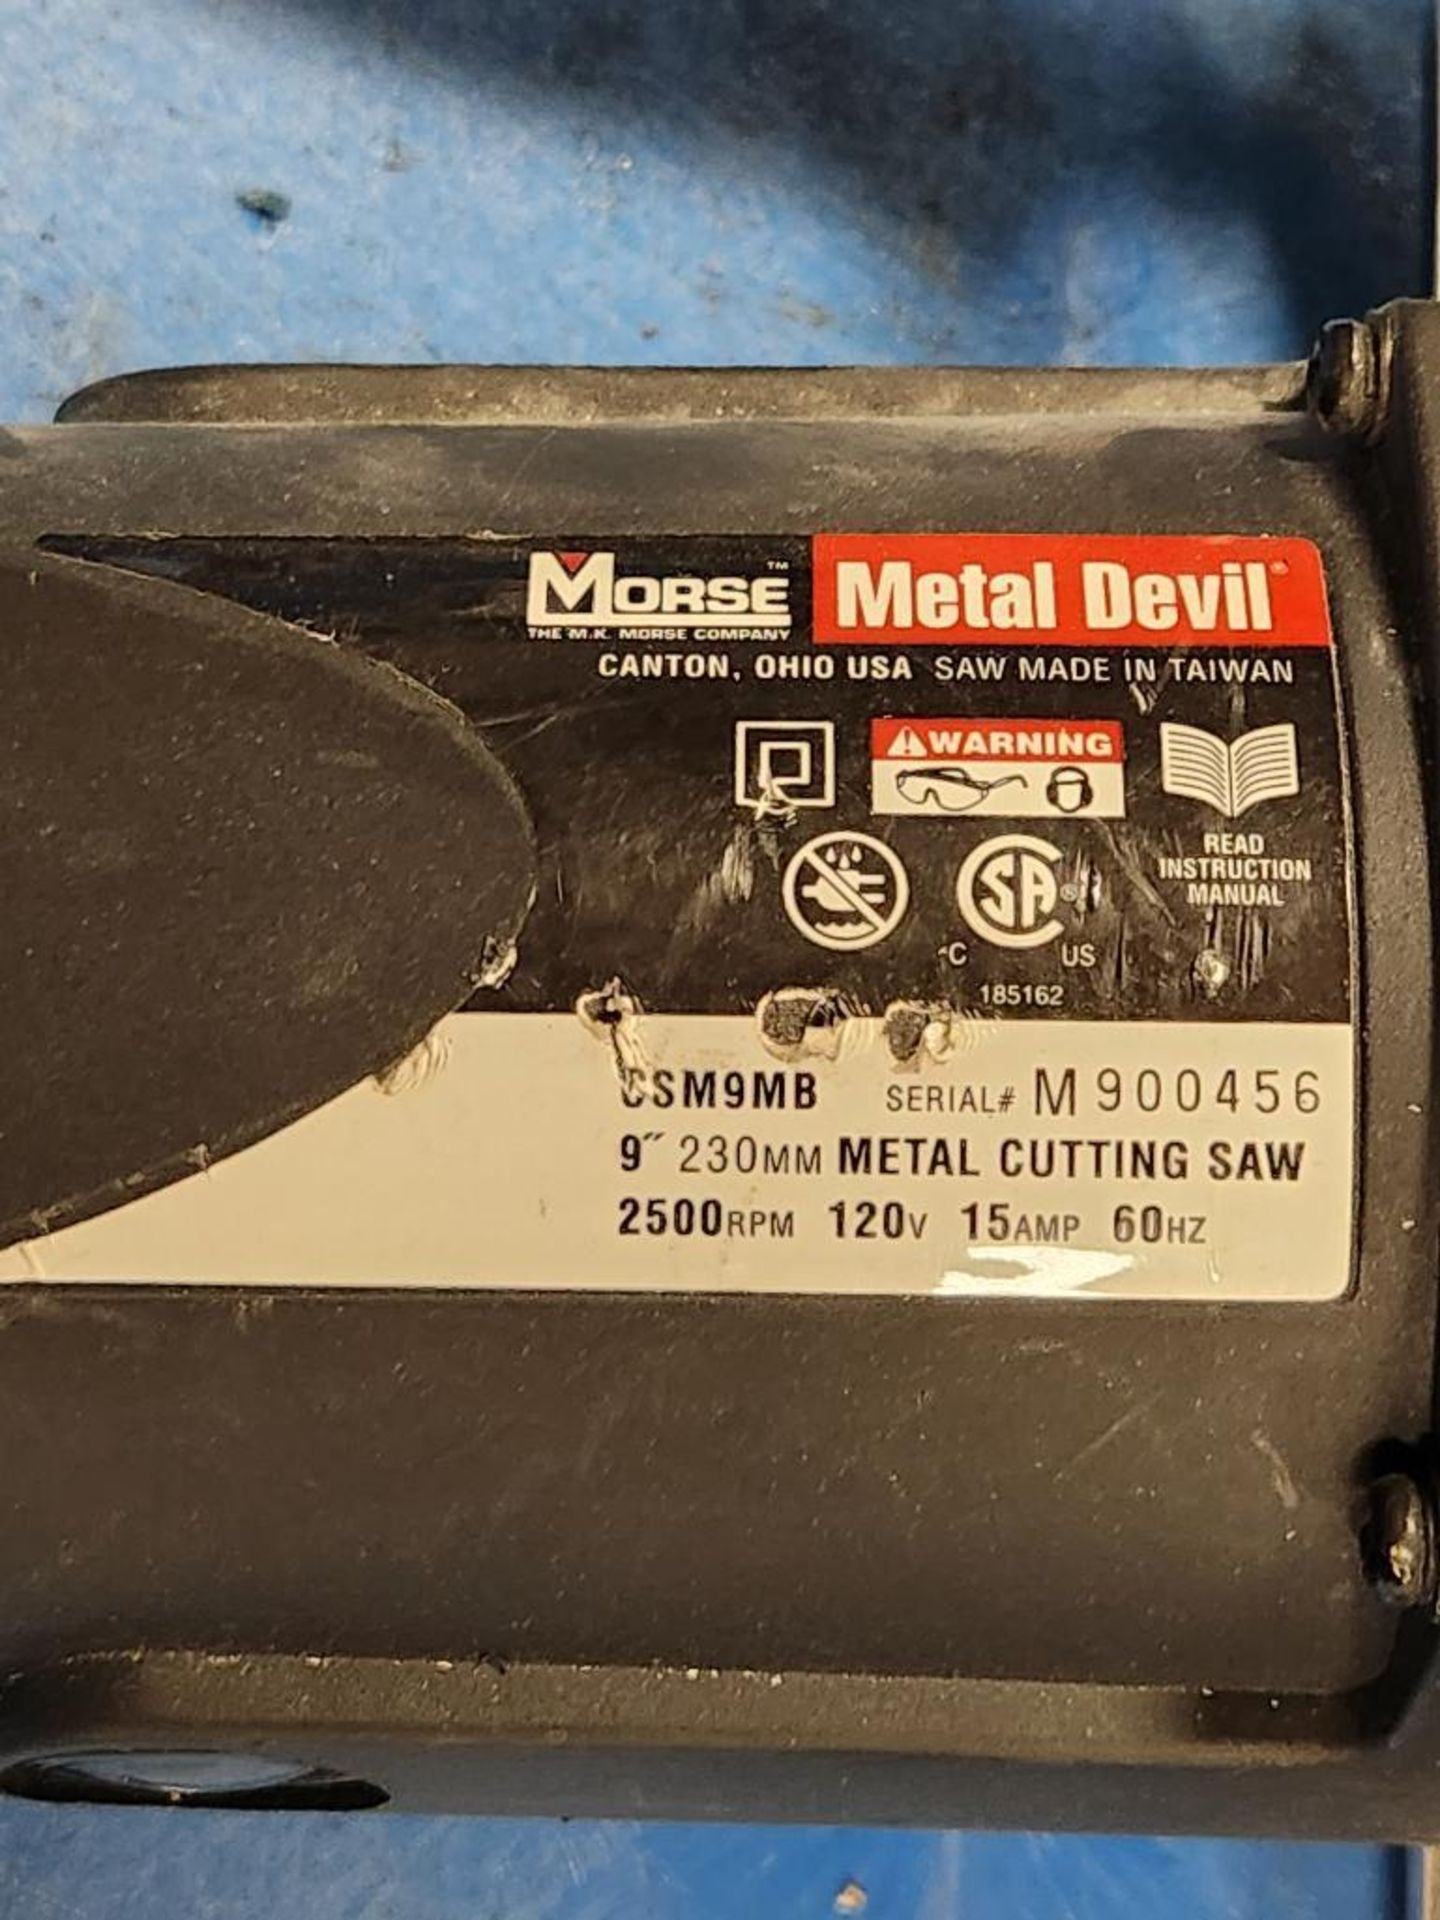 Morse Metal Devil 9" TCT Metal Cutting Circular Saw, Model CSM9MB, S/N M900456 - Image 3 of 6